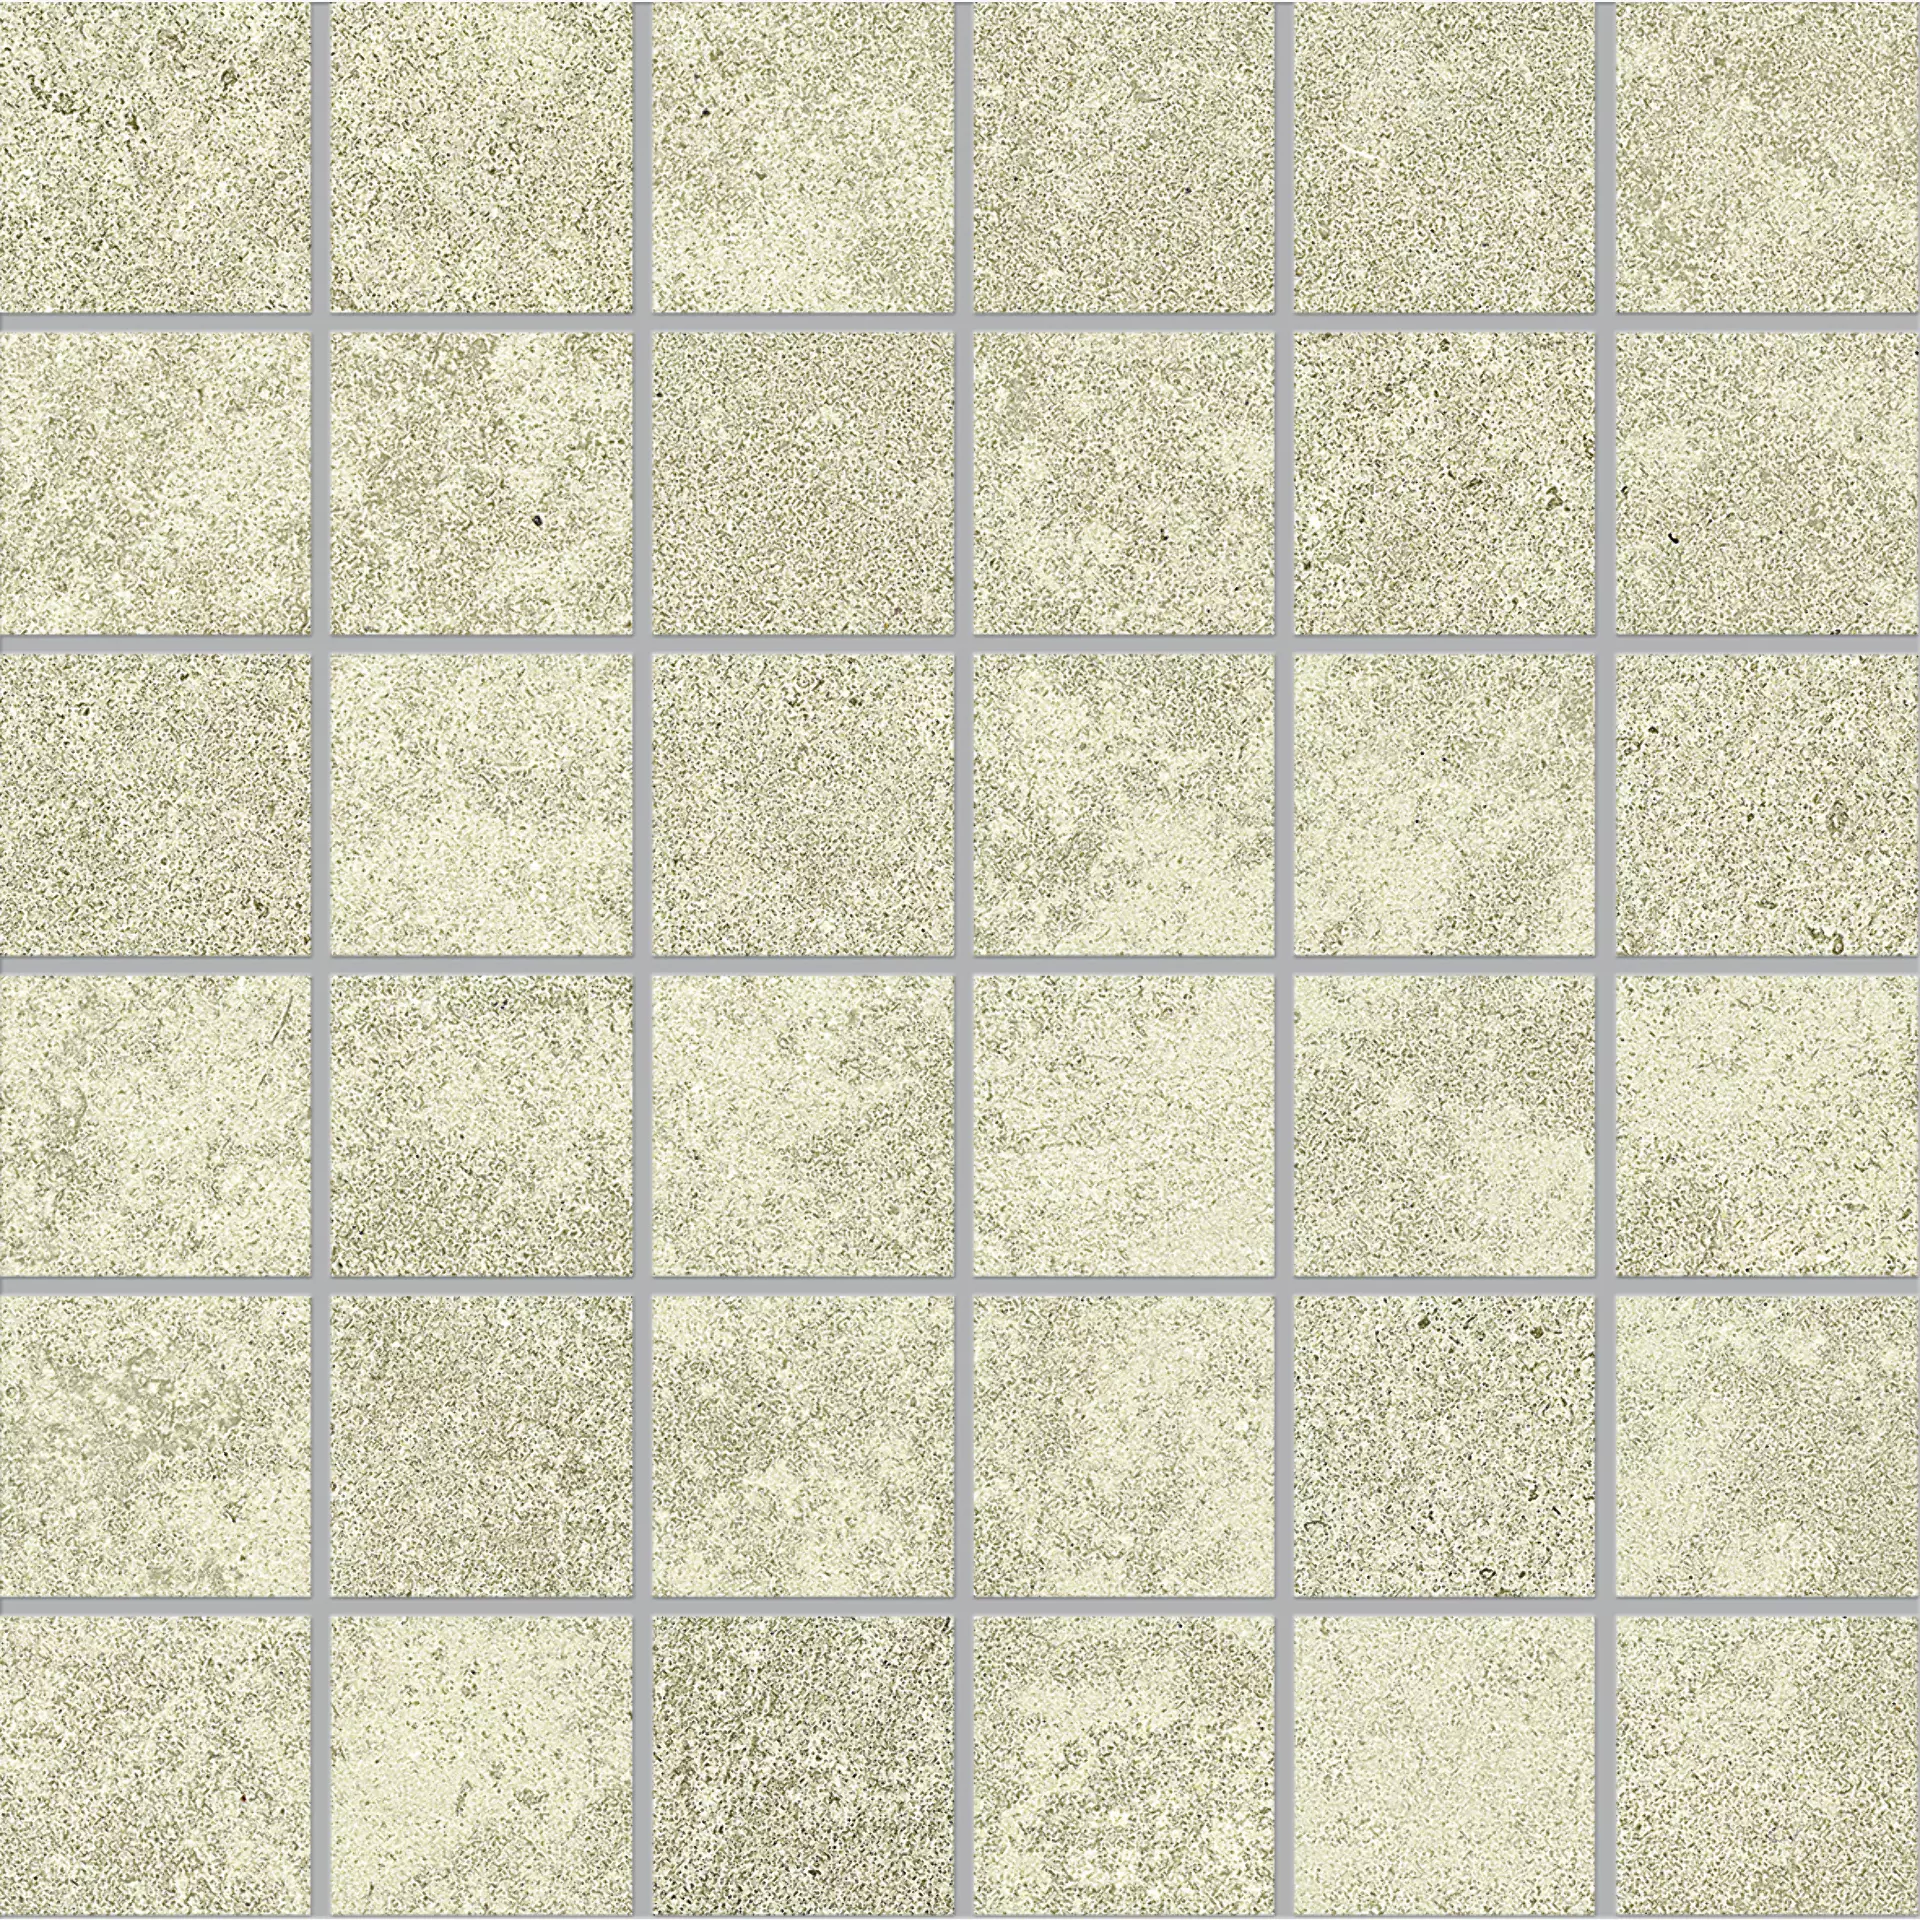 Provenza Re-Play Concrete Sand Naturale Sand EKGA natur 30x30cm Mosaik 5x5 9,5mm